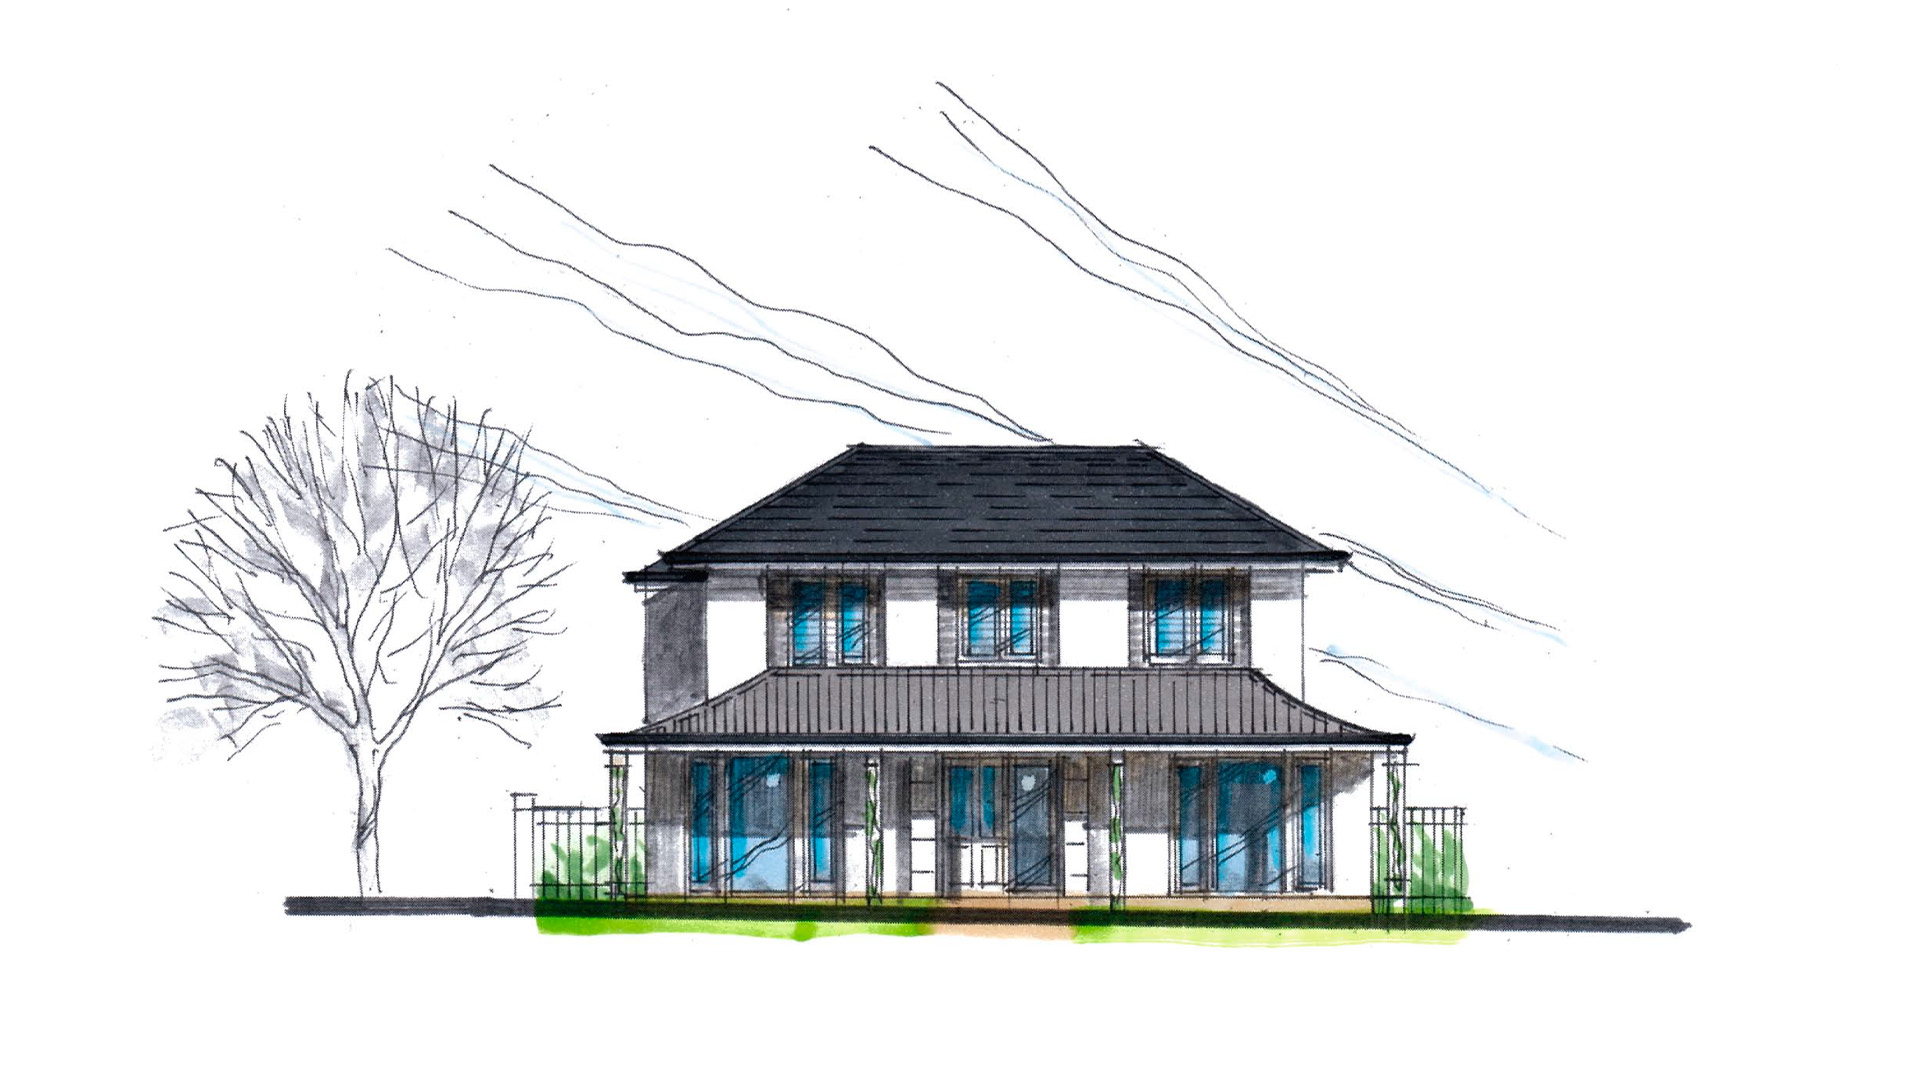 An architectural sketch of the Englehart Glen Iris residence.